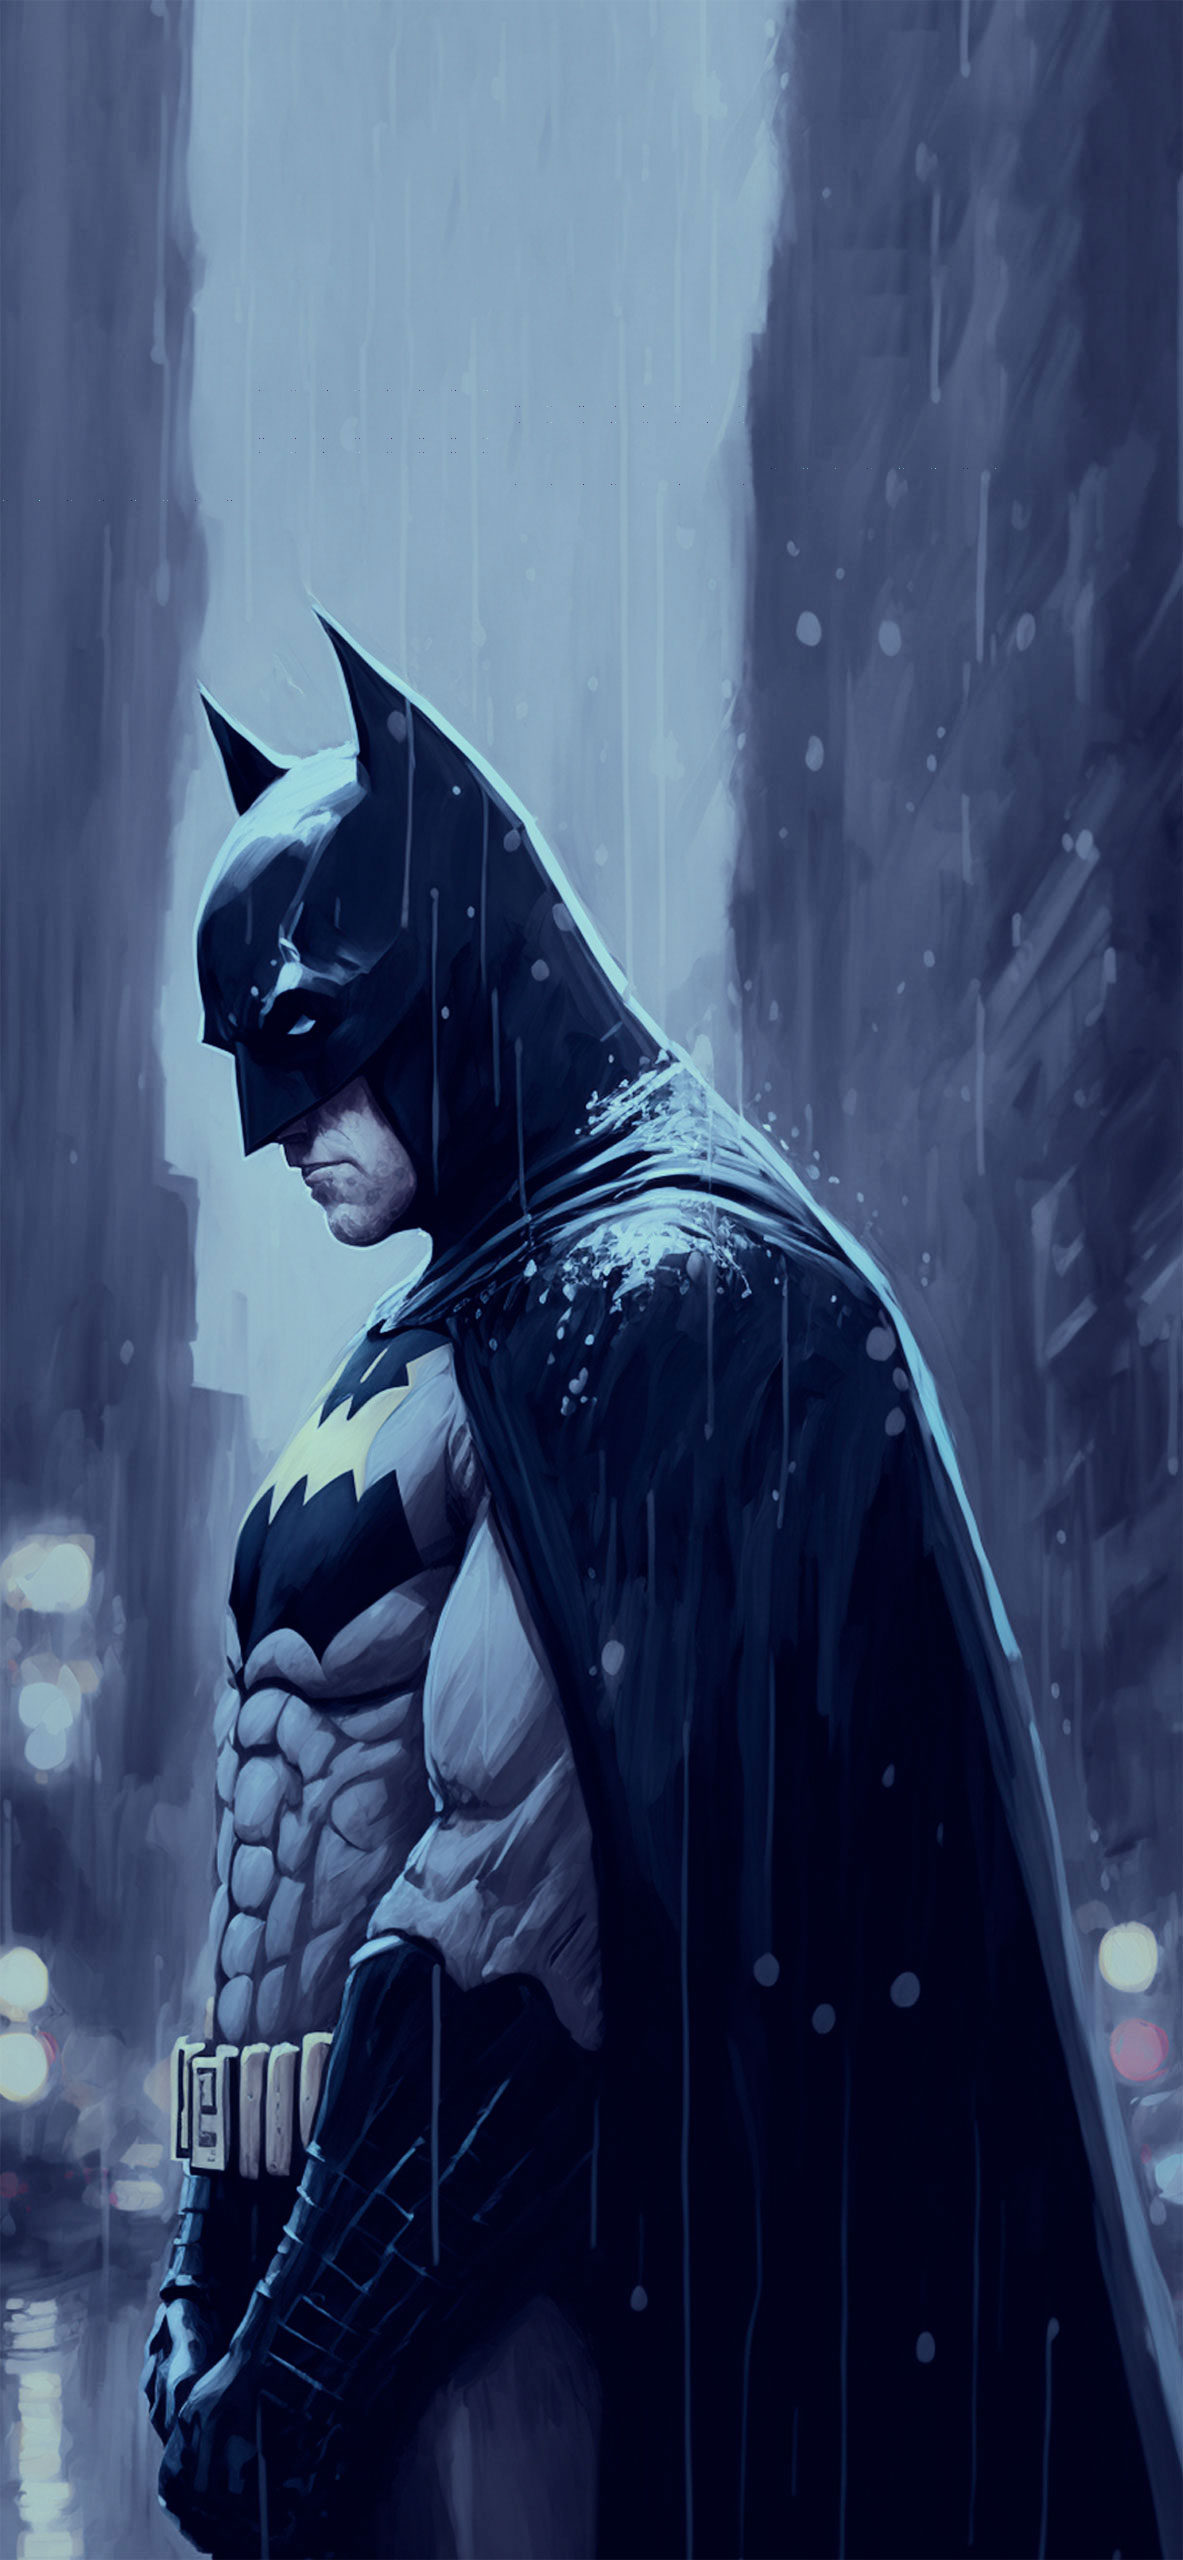 Download 8k Ultra Hd Amoled Batman In Rain Wallpaper